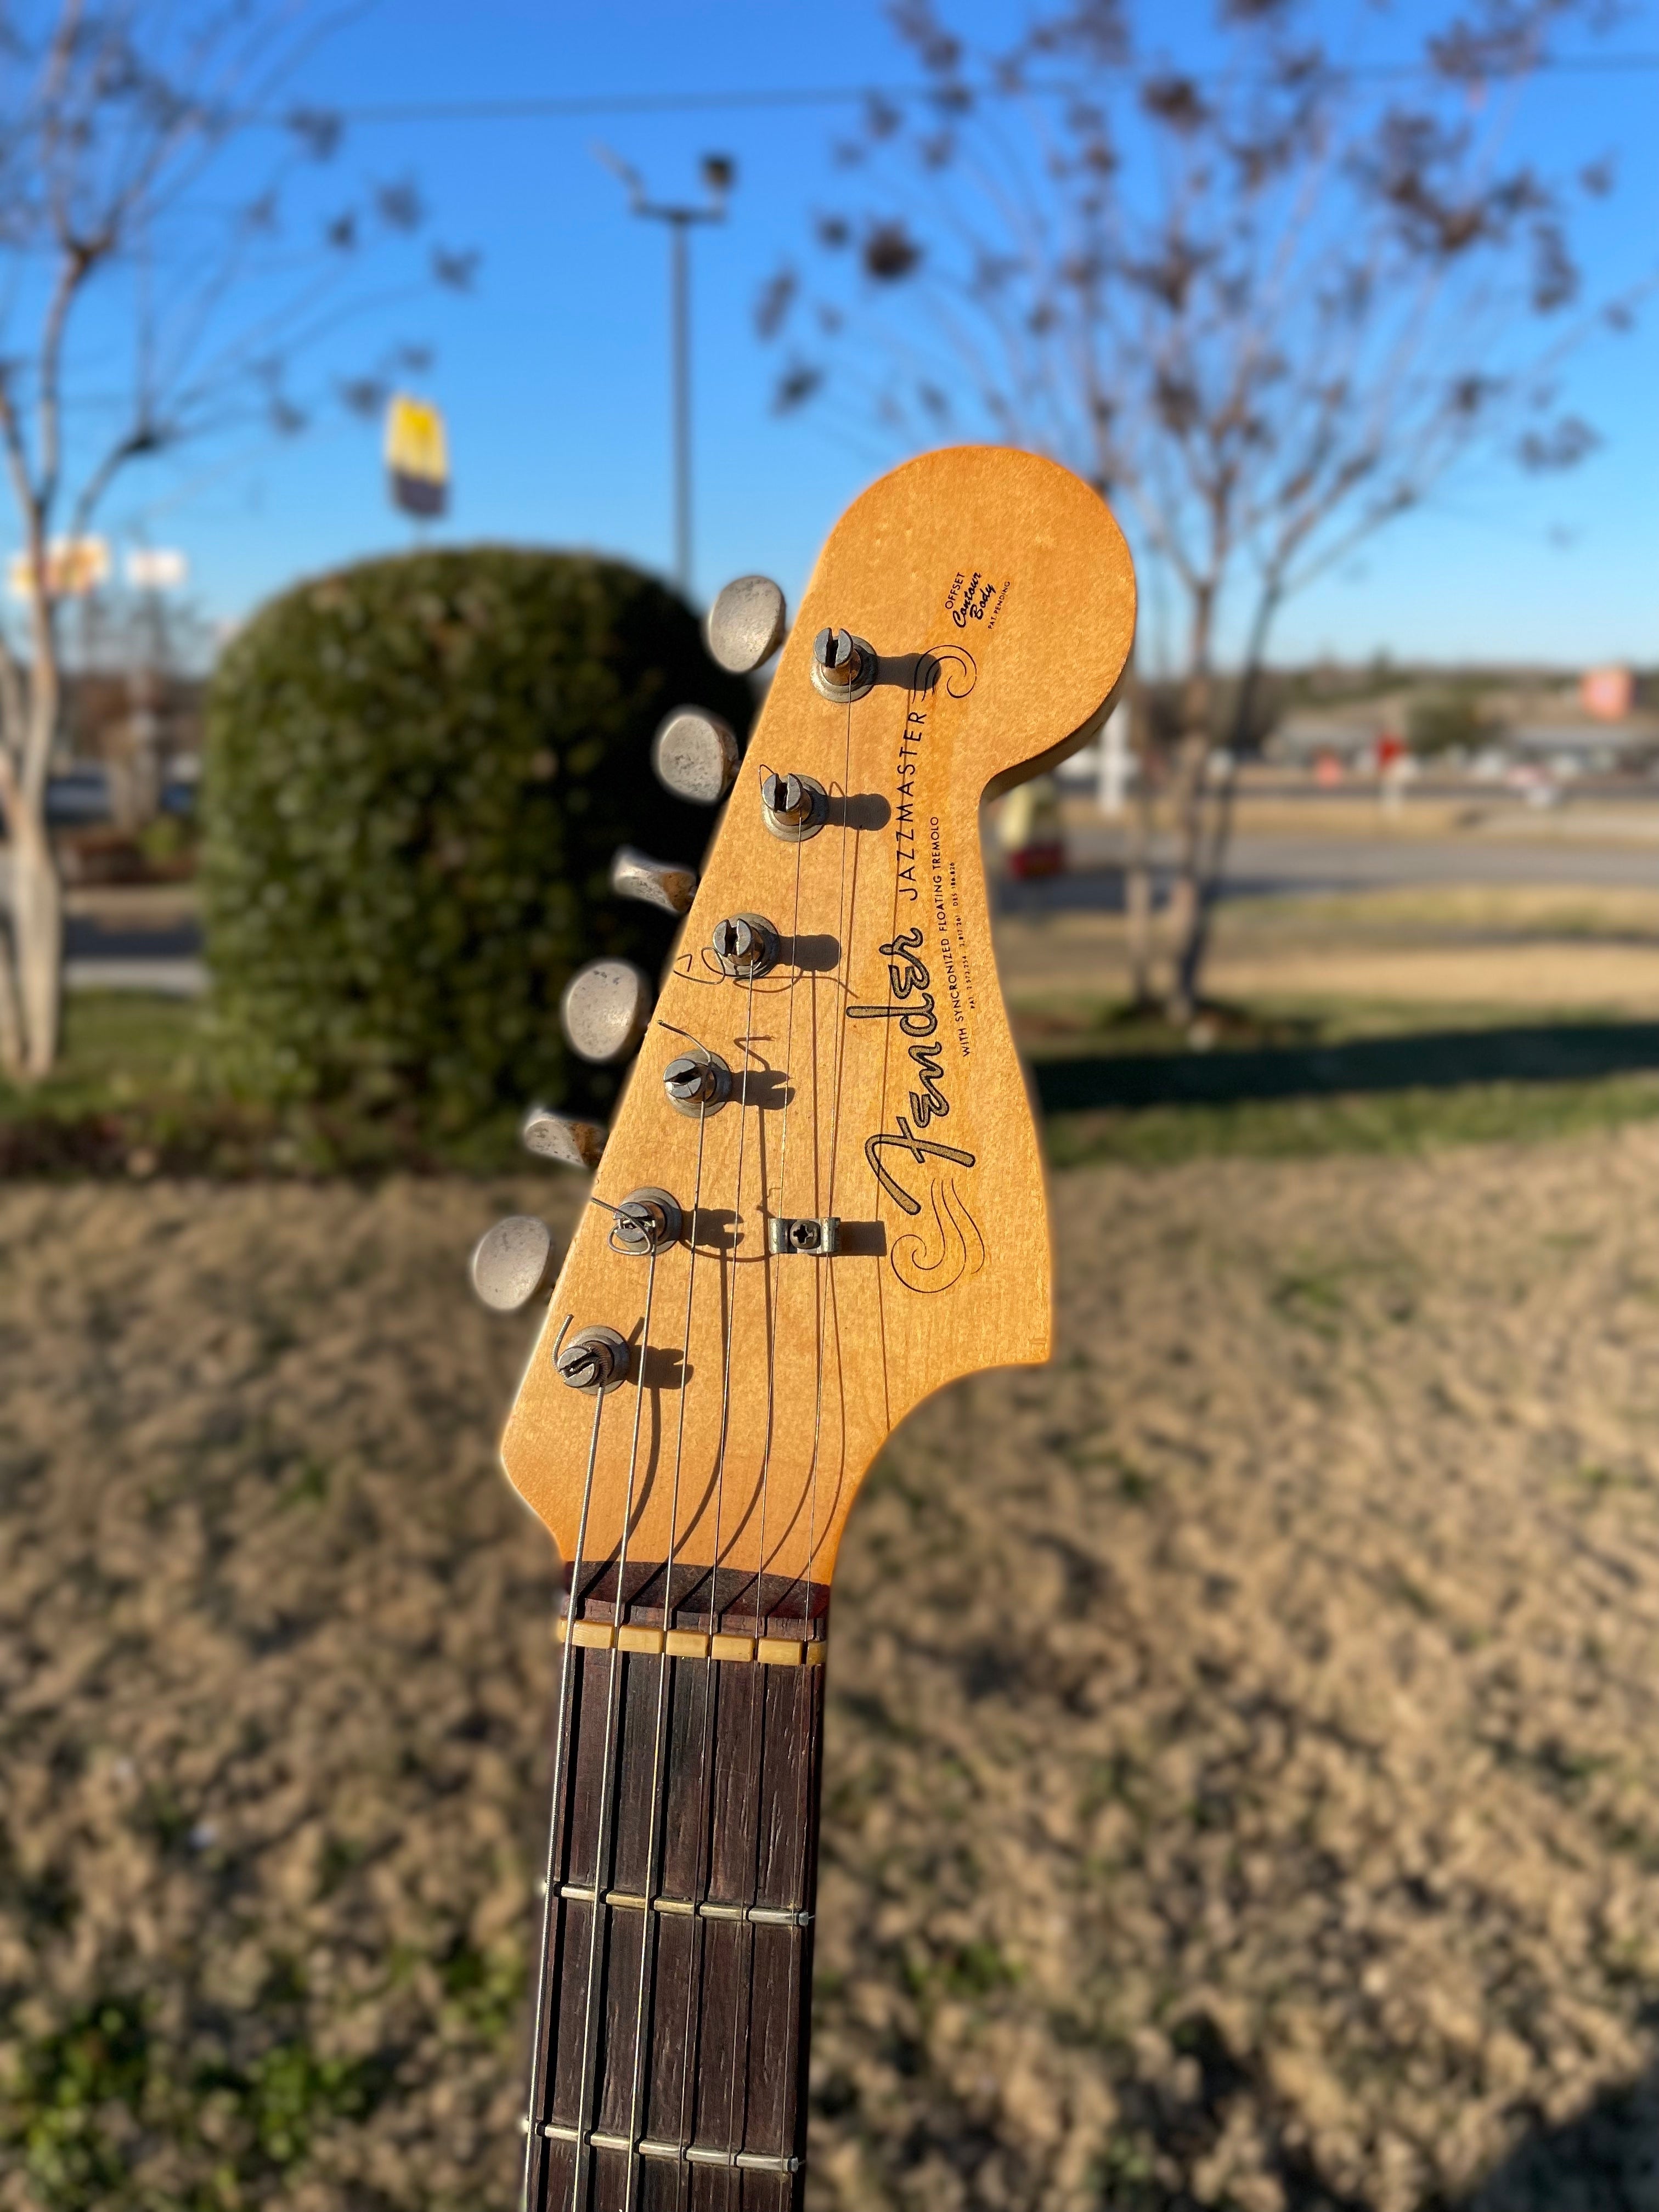 Fender Jazzmaster 1961 neck and headstock with slab Rosewood fretboard.